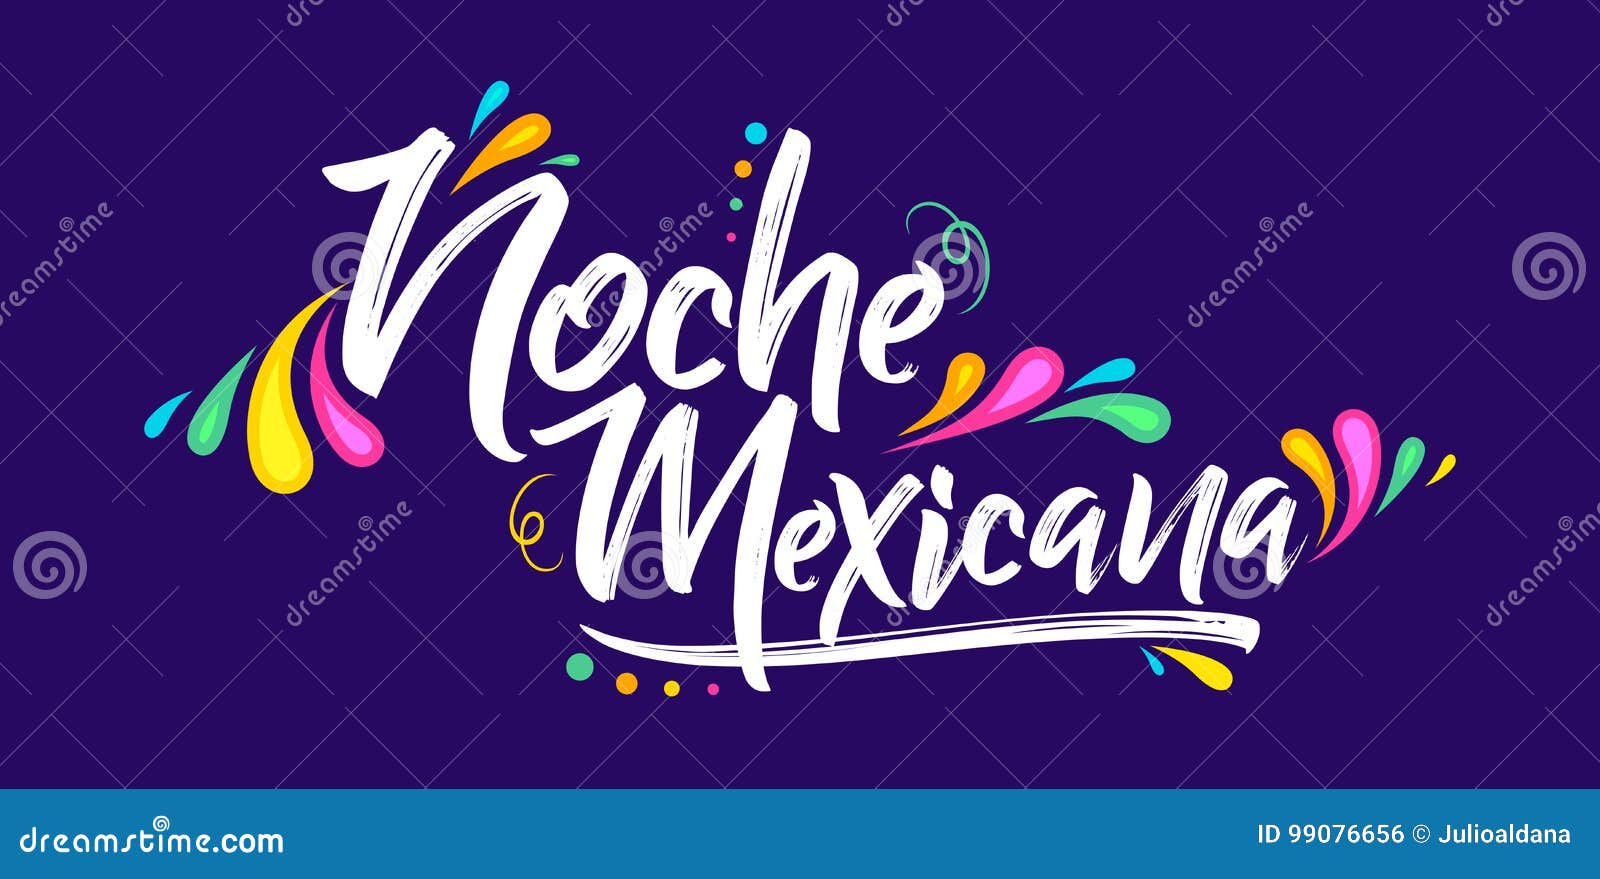 noche mexicana, mexican night spanish text